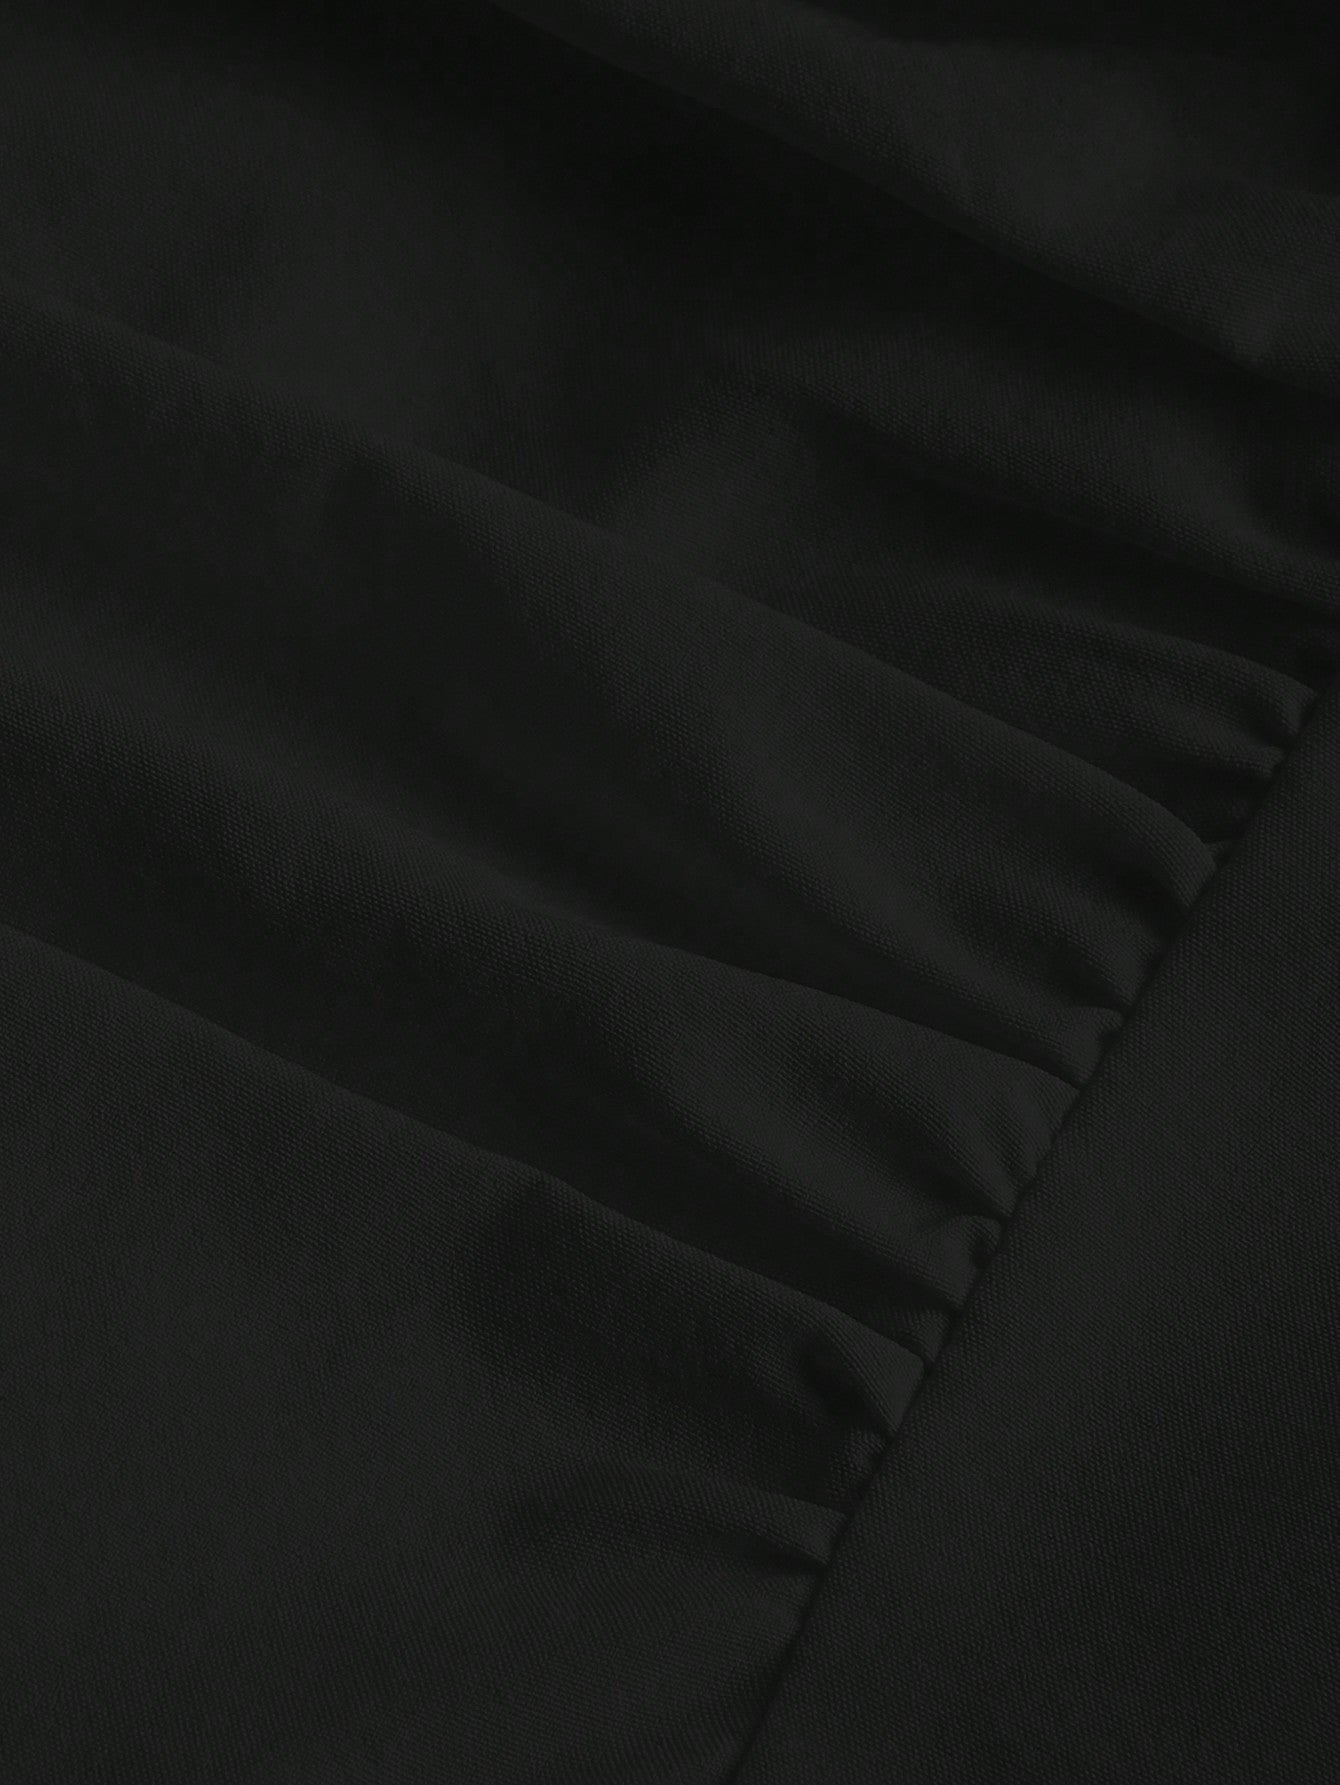 MOD Solid Ruched Cami Black Long Dress - Negative Apparel